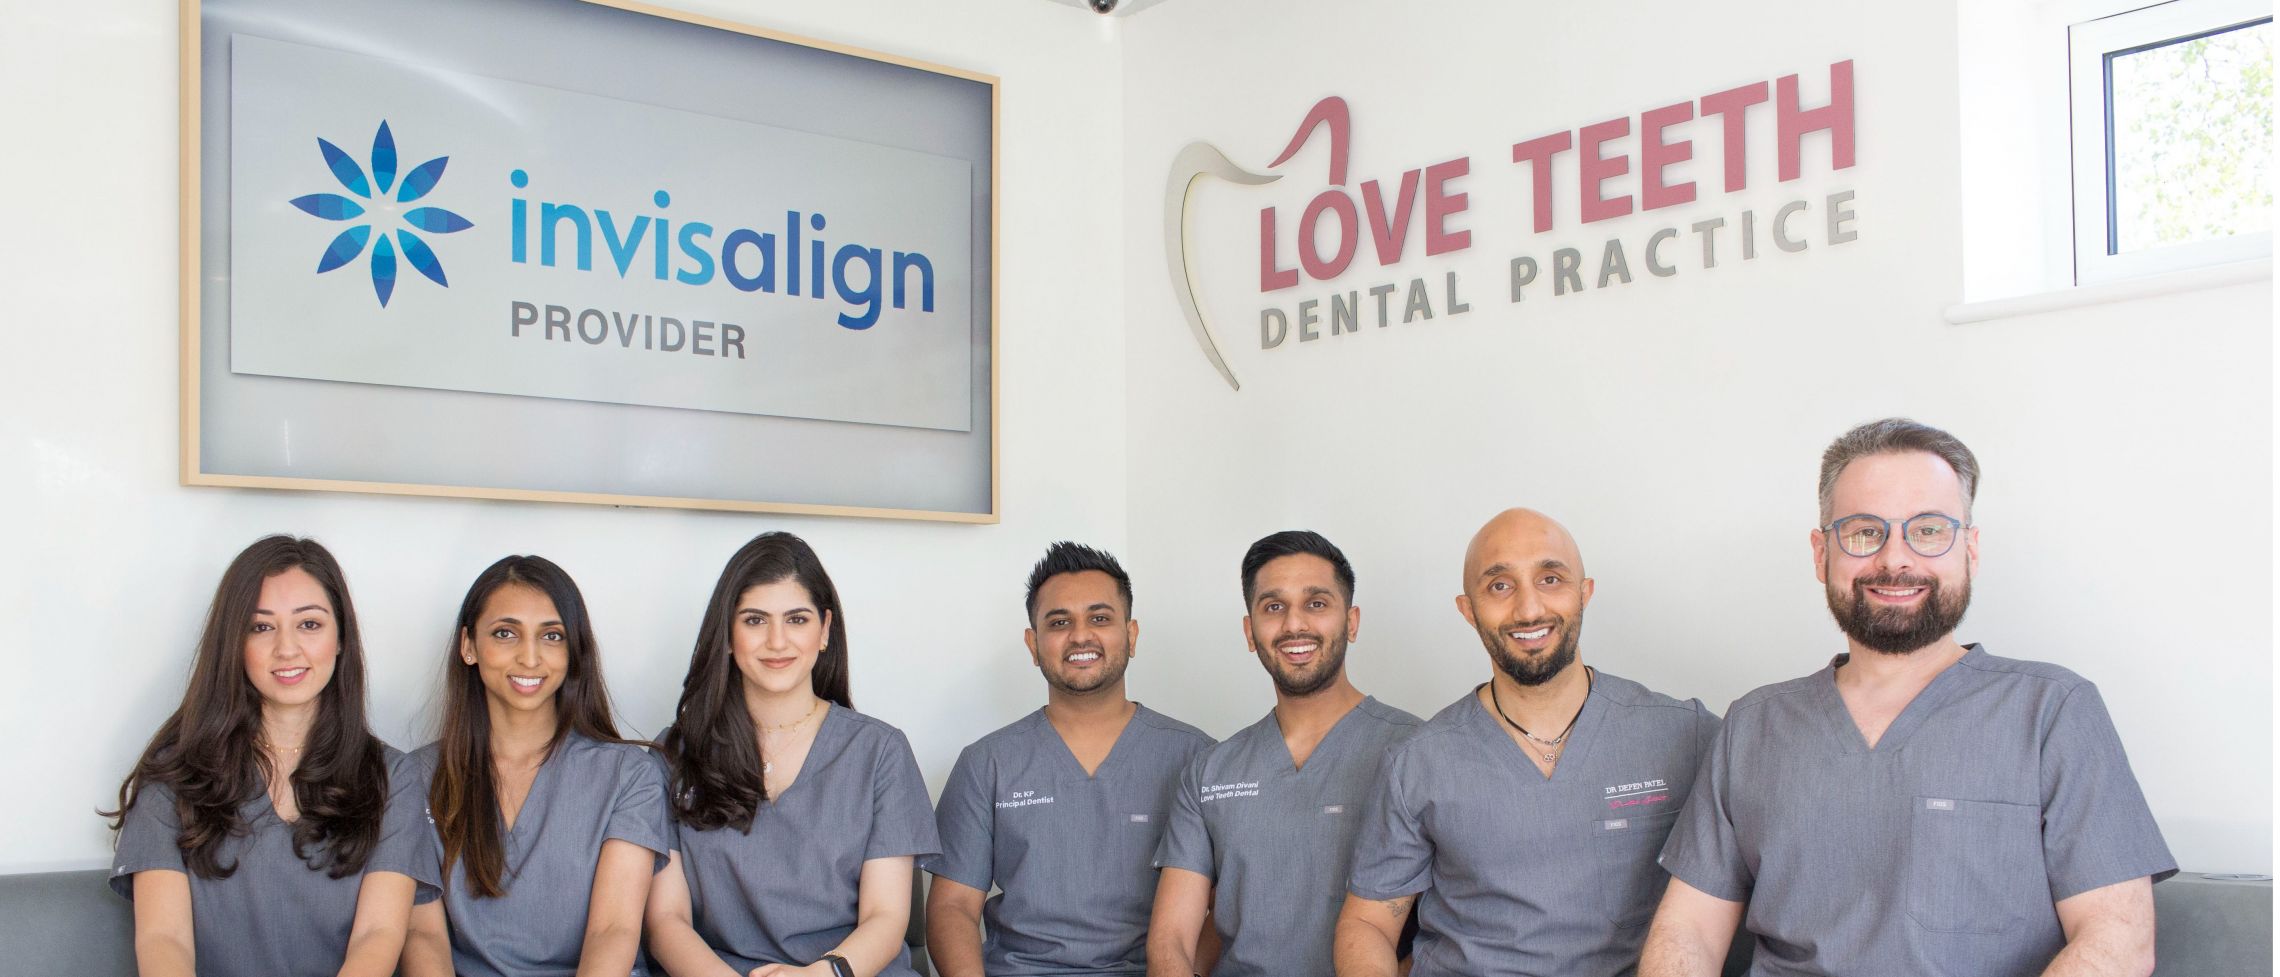 Dental Team